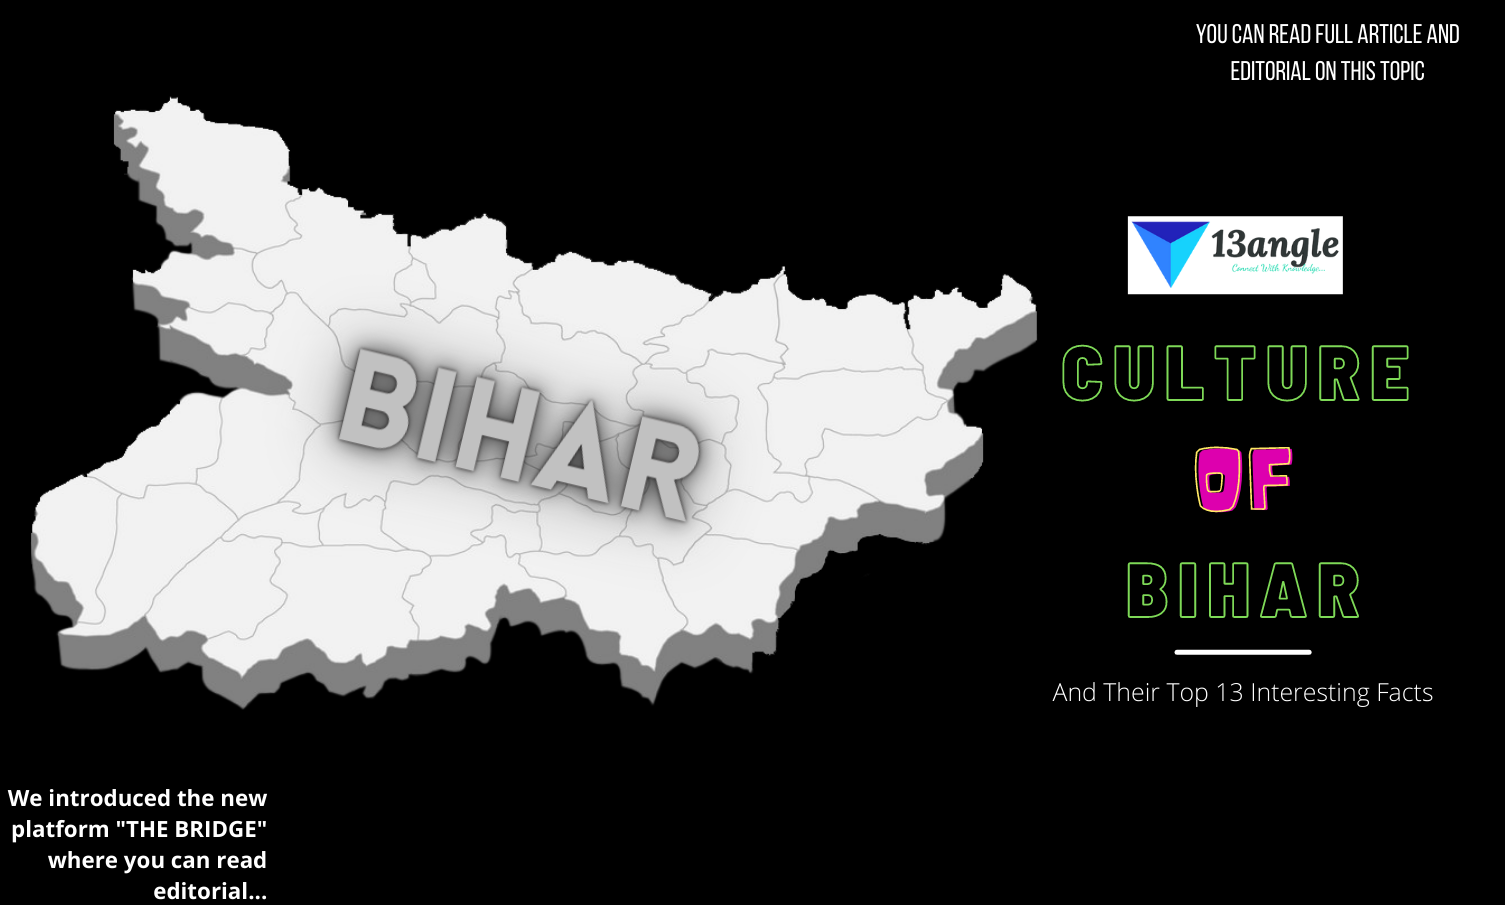 Culture Of Bihar- 13angle.com